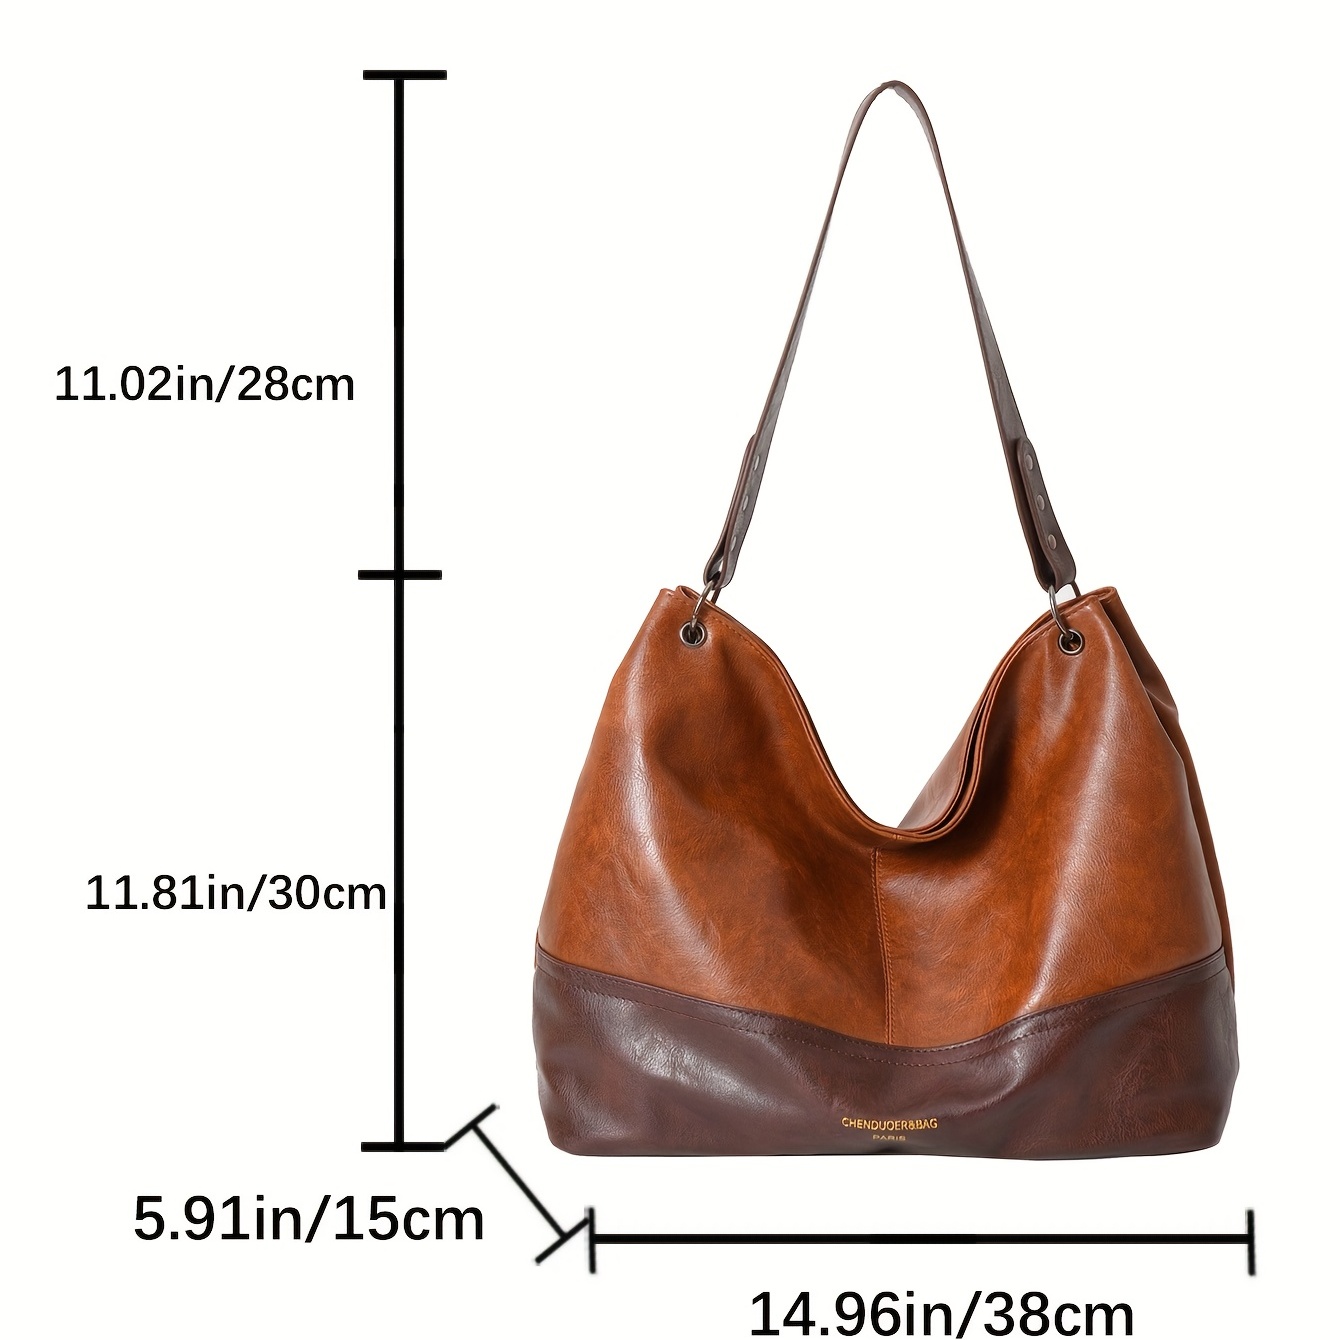 Women's Large Hobo Tote Bags in Vegan Leather